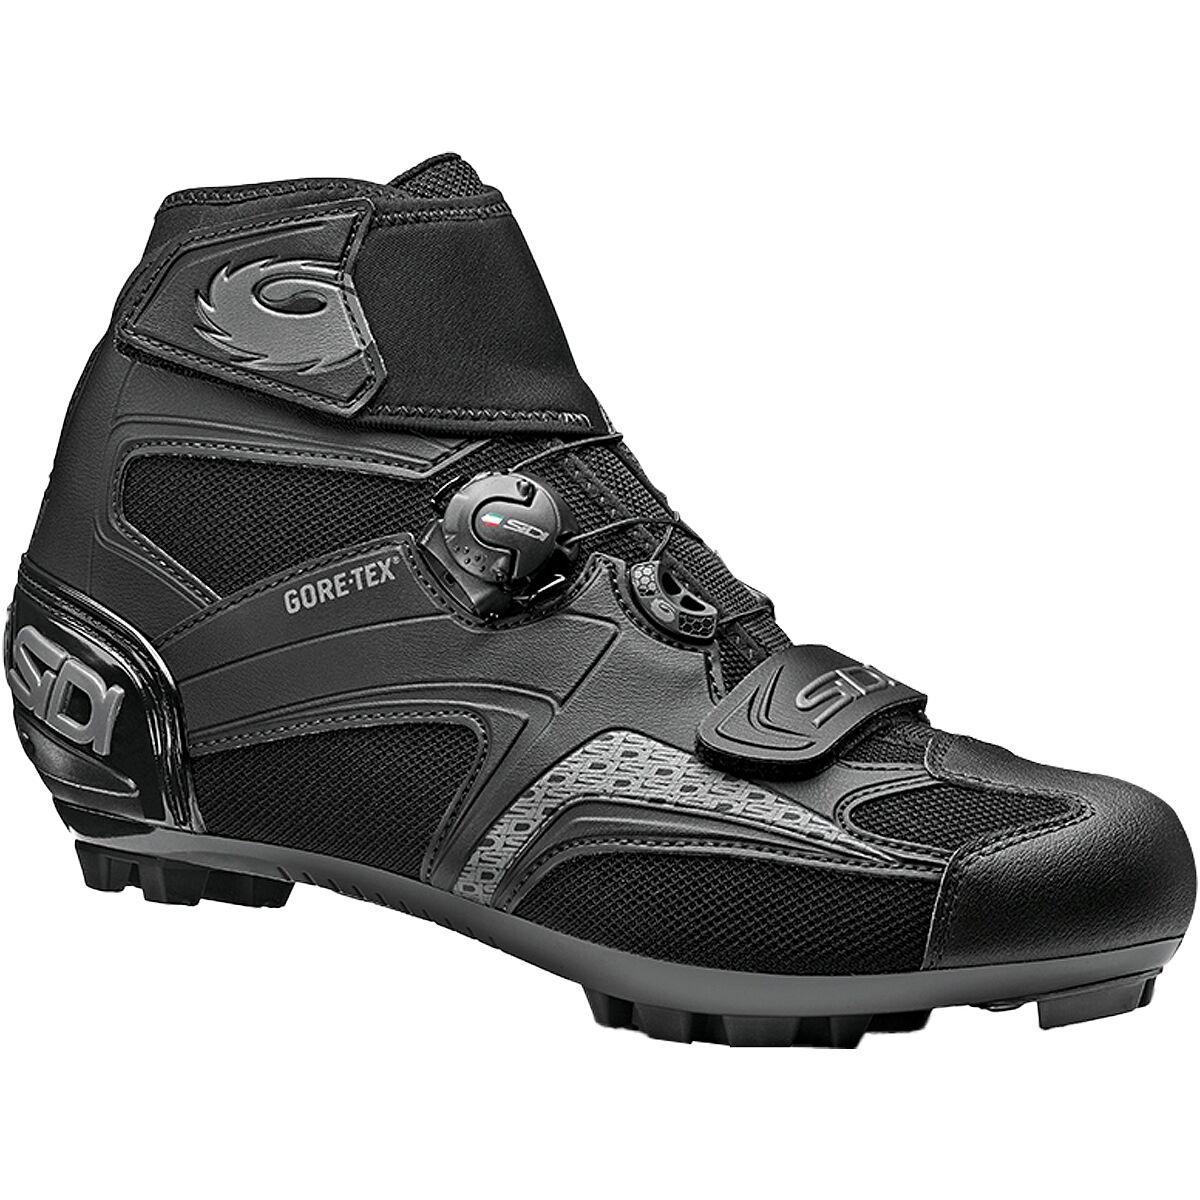 Sidi Frost GORE-TEX 2 Cycling Shoe - Men's Black/Black, 44.0 -  SMS-FG2-BKBK-440